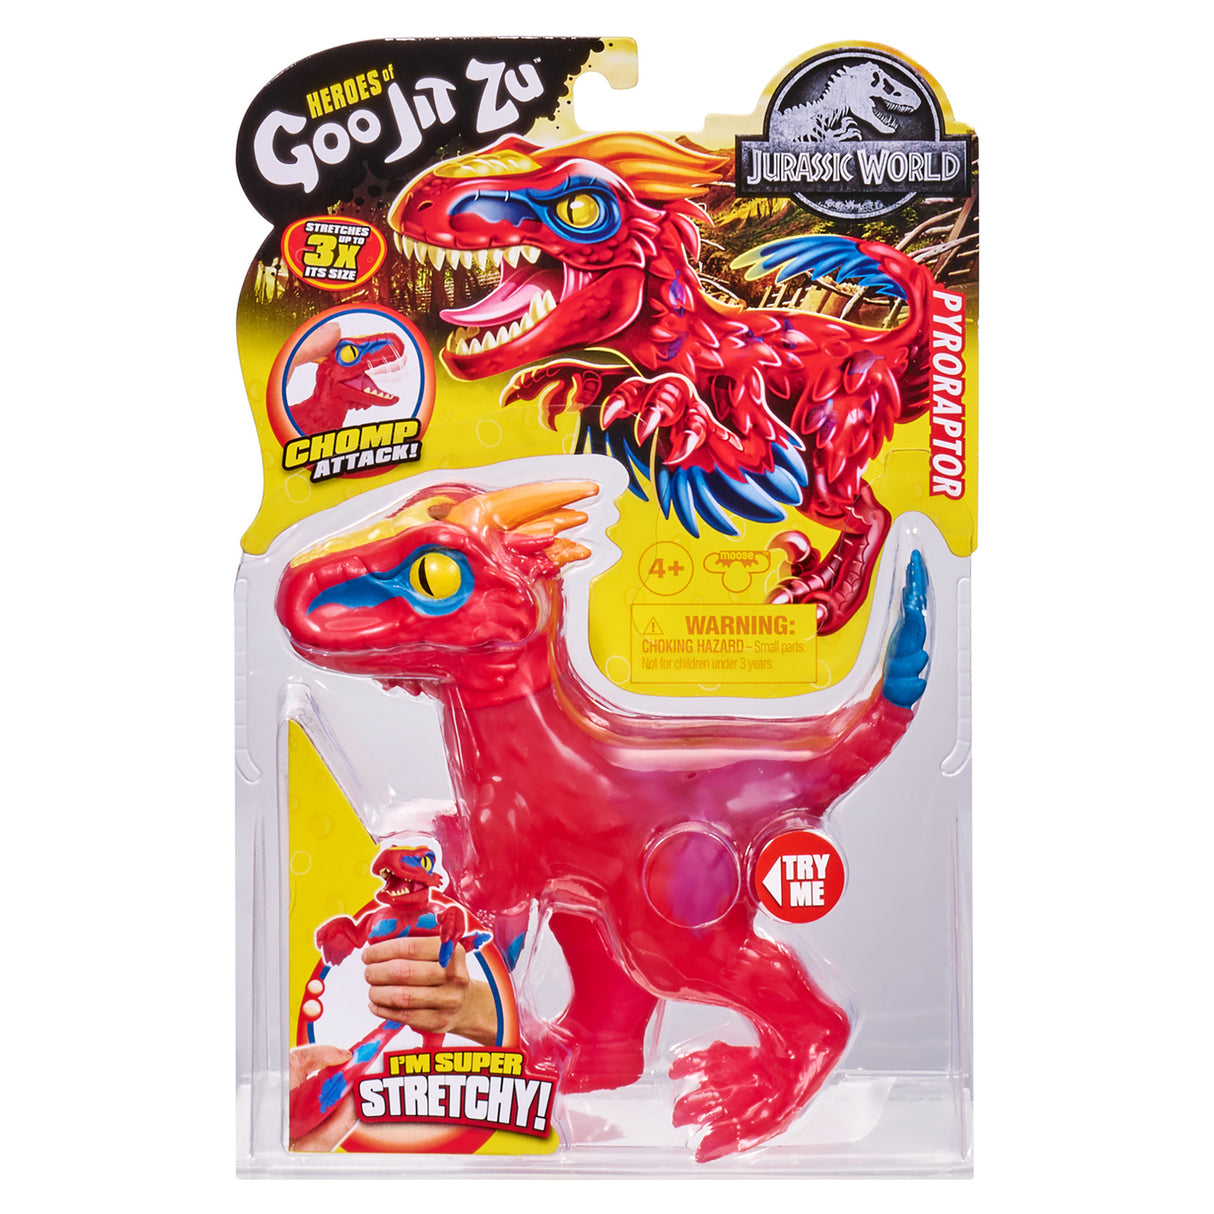 Heroes Of Goo Jit Zu Jurassic World Stretch Heroes - Chomp Attack Pyroraptor